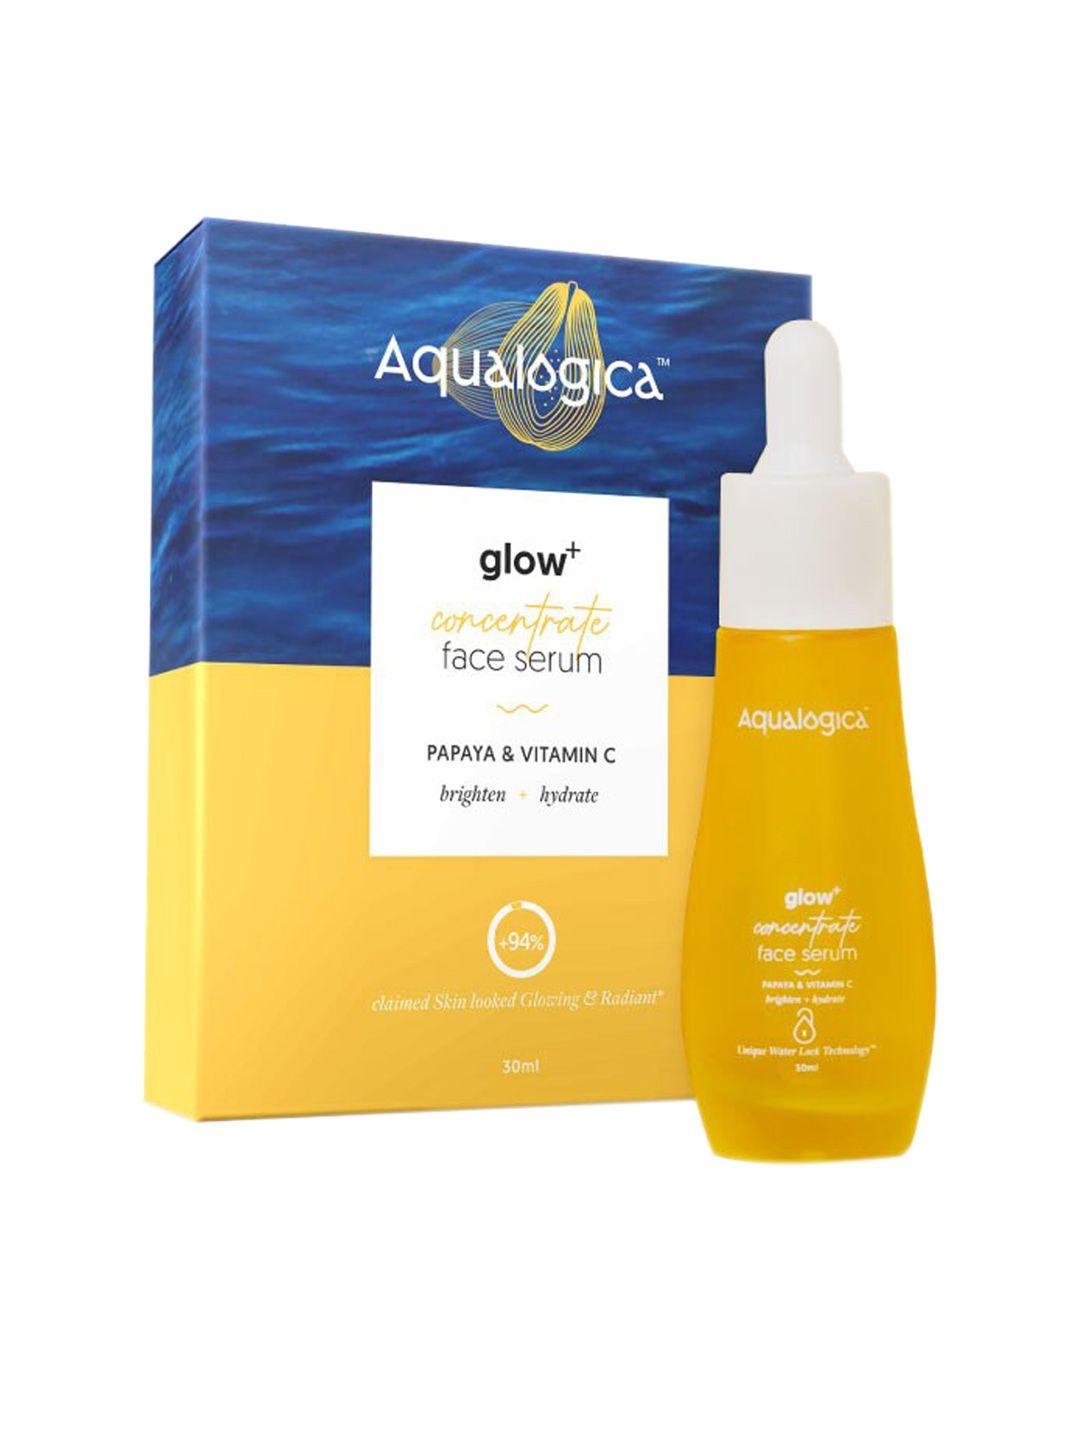 aqualogica glow+ concentrate face serum with papaya & vitamin c - 30 ml